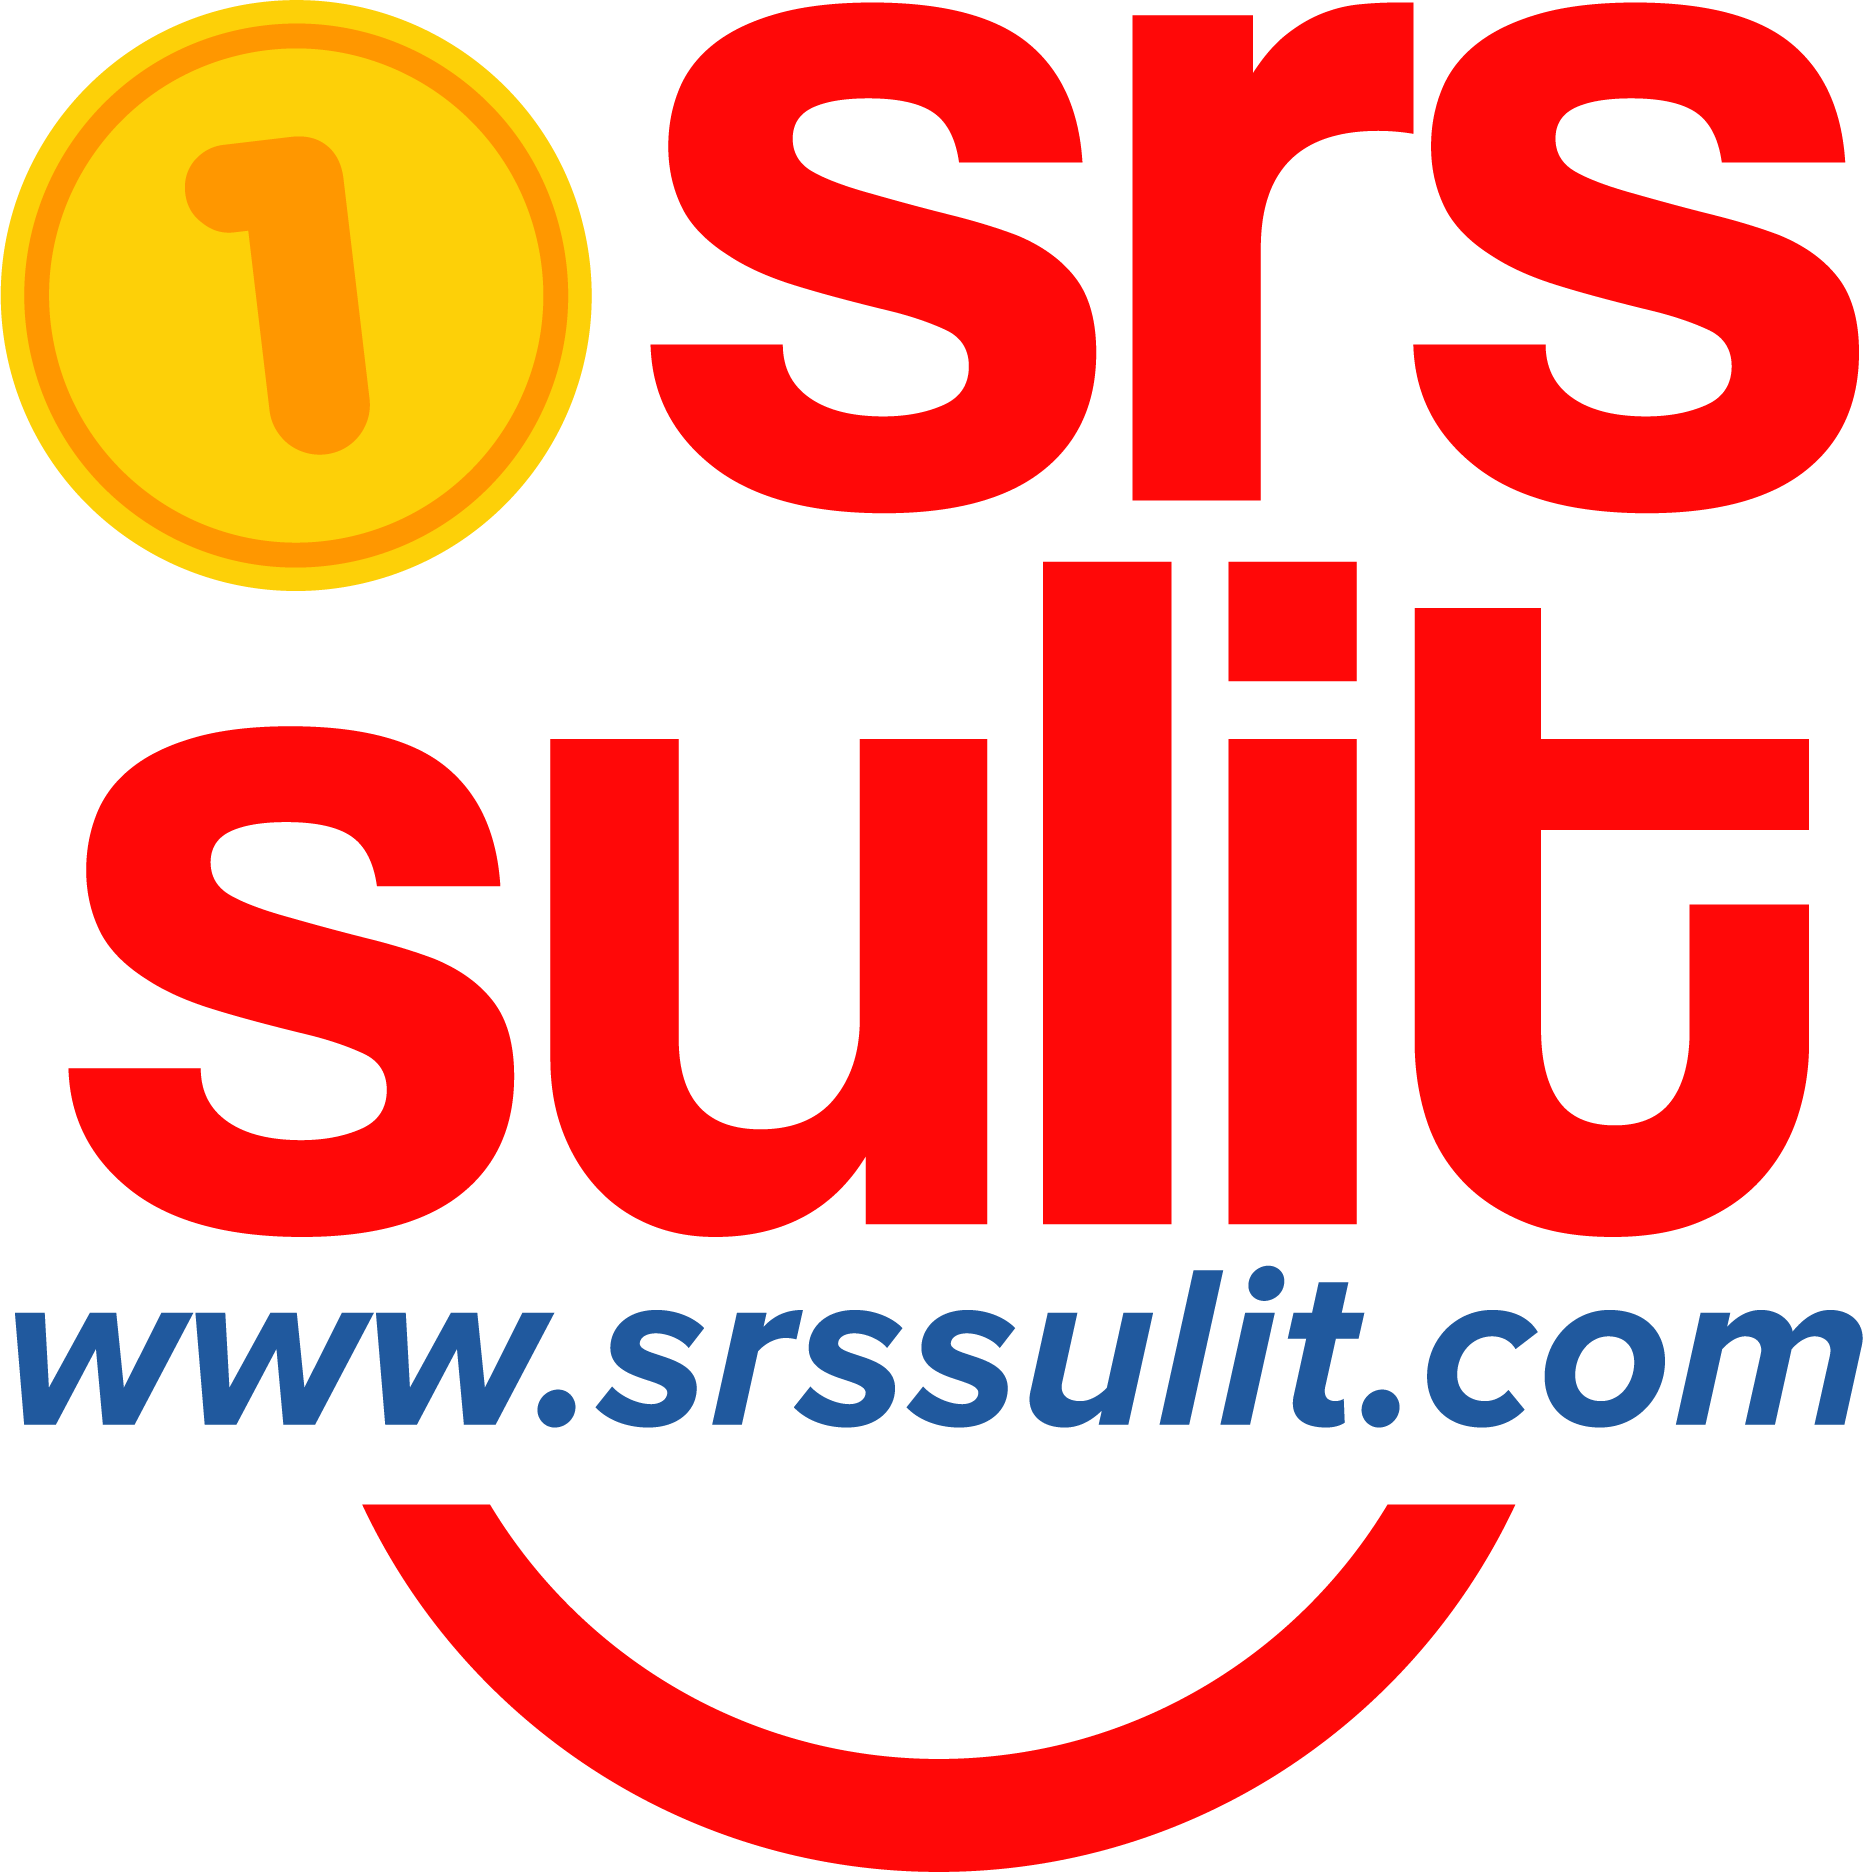 SRS Sulit